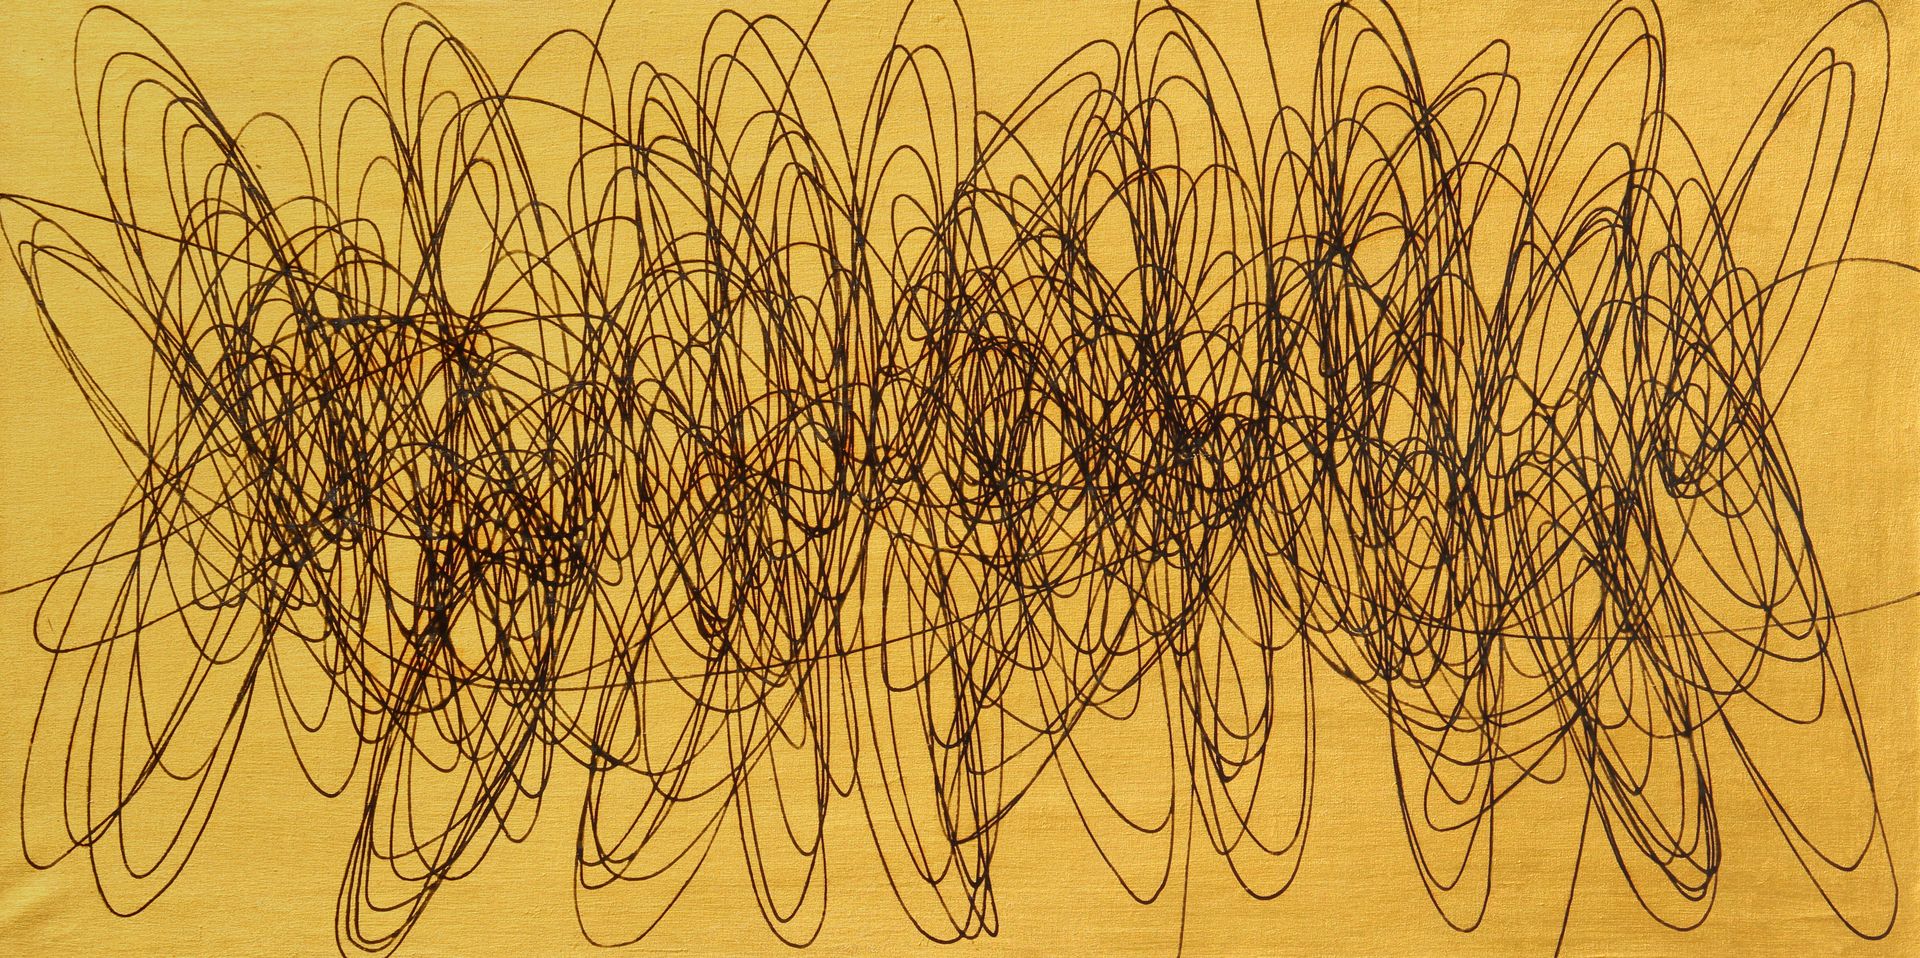 Roberto CRIPPA Spirale 1951, óleo sobre lienzo, cm. 60x120

Certificado de Rober&hellip;